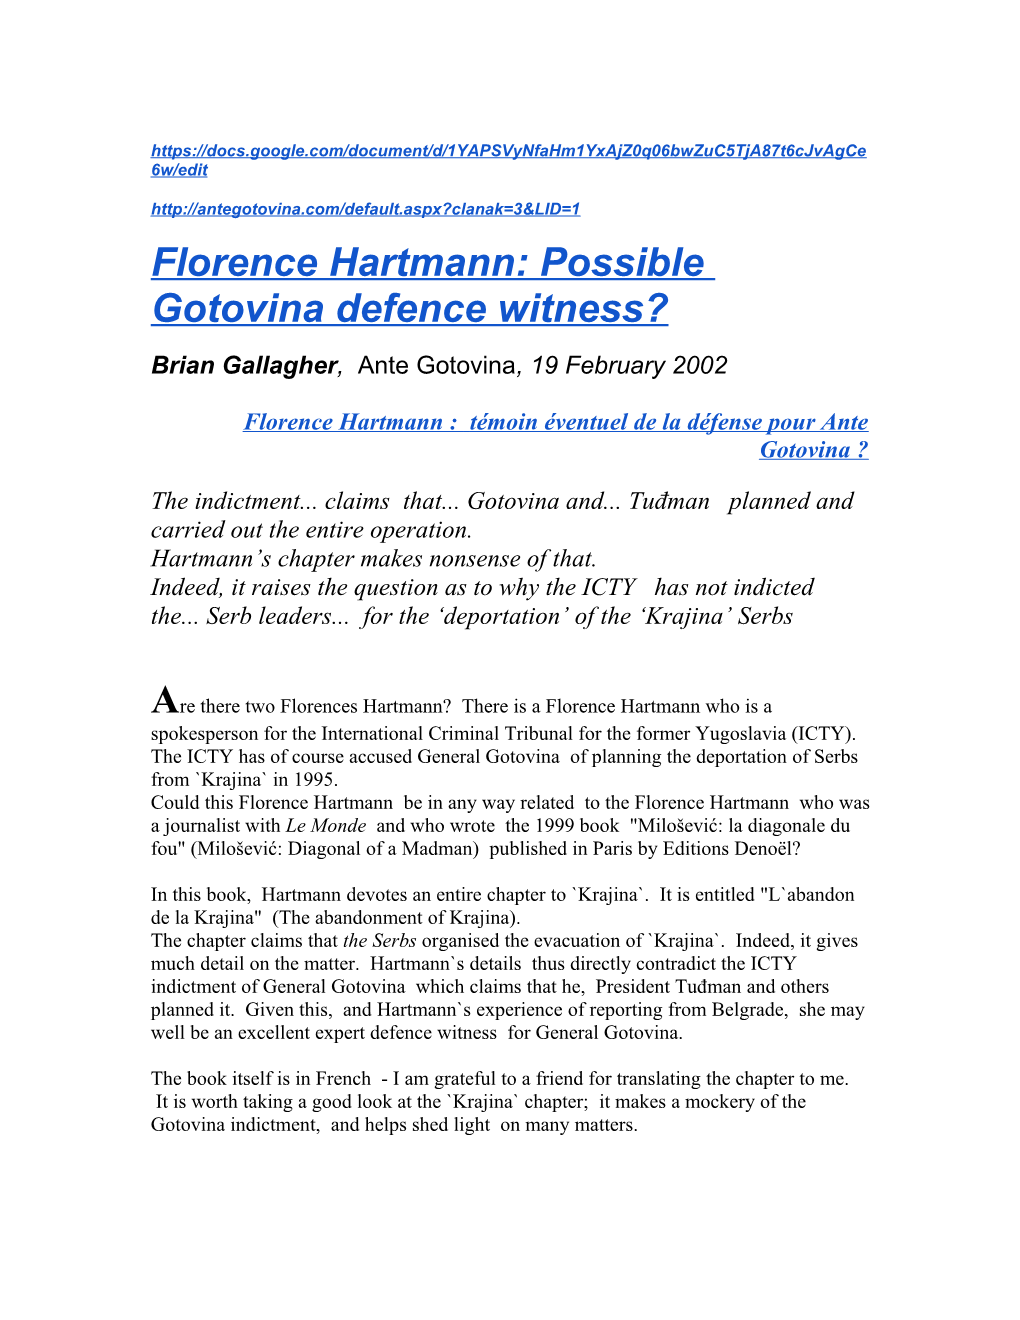 Florence Hartmann: Possible Gotovina Defence Witness?